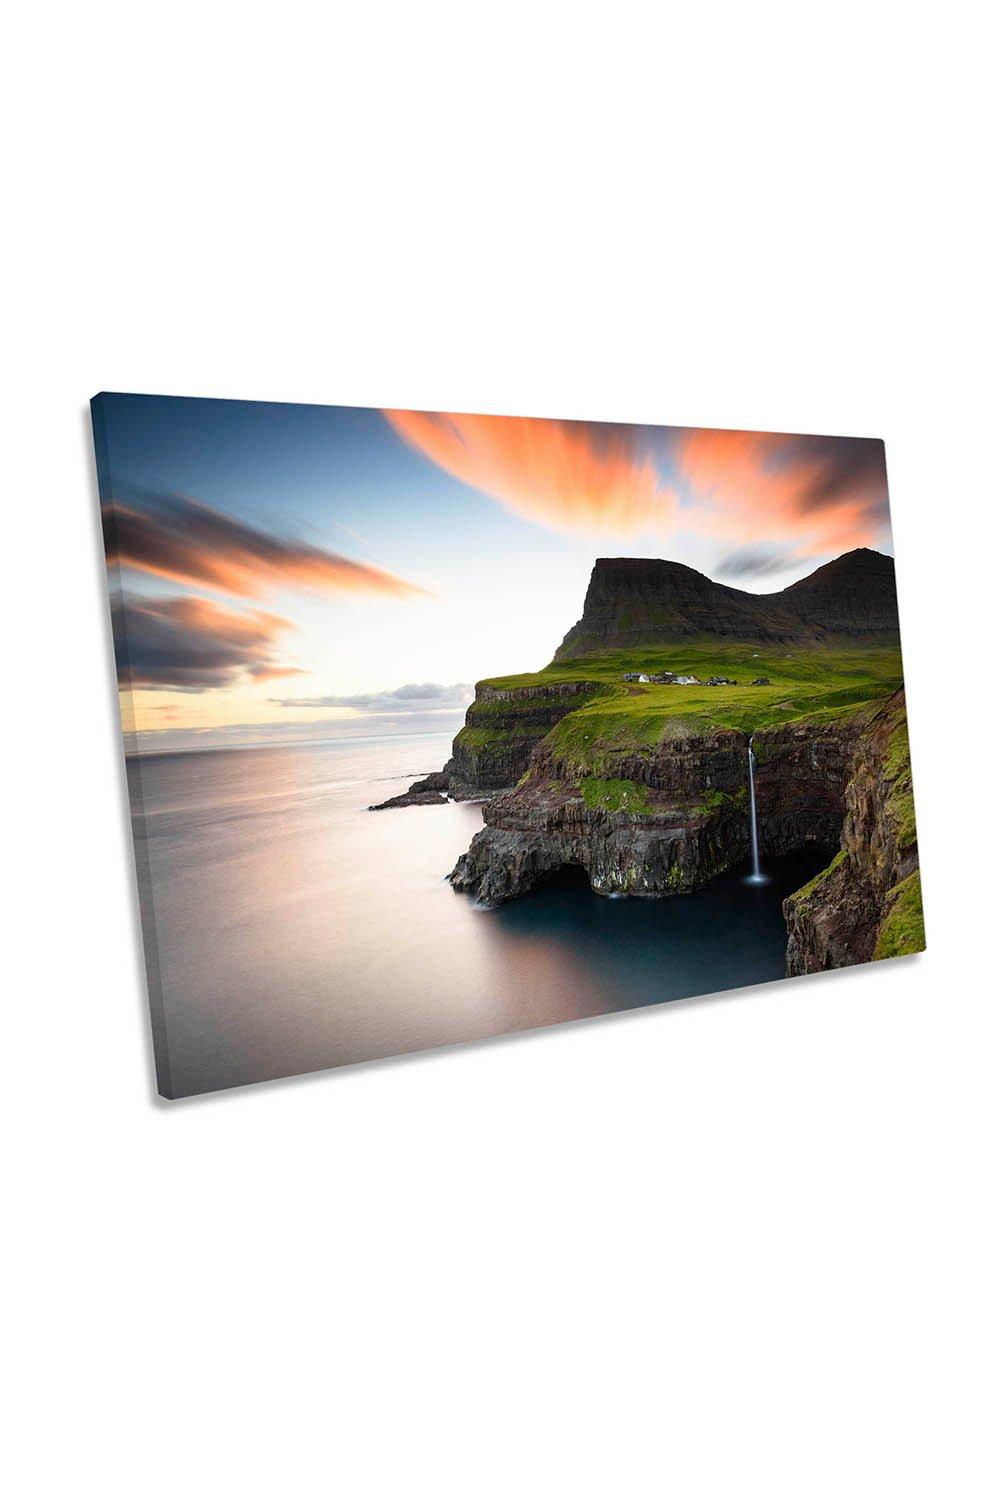 Faroe Islands Denmark Sunset Canvas Wall Art Picture Print